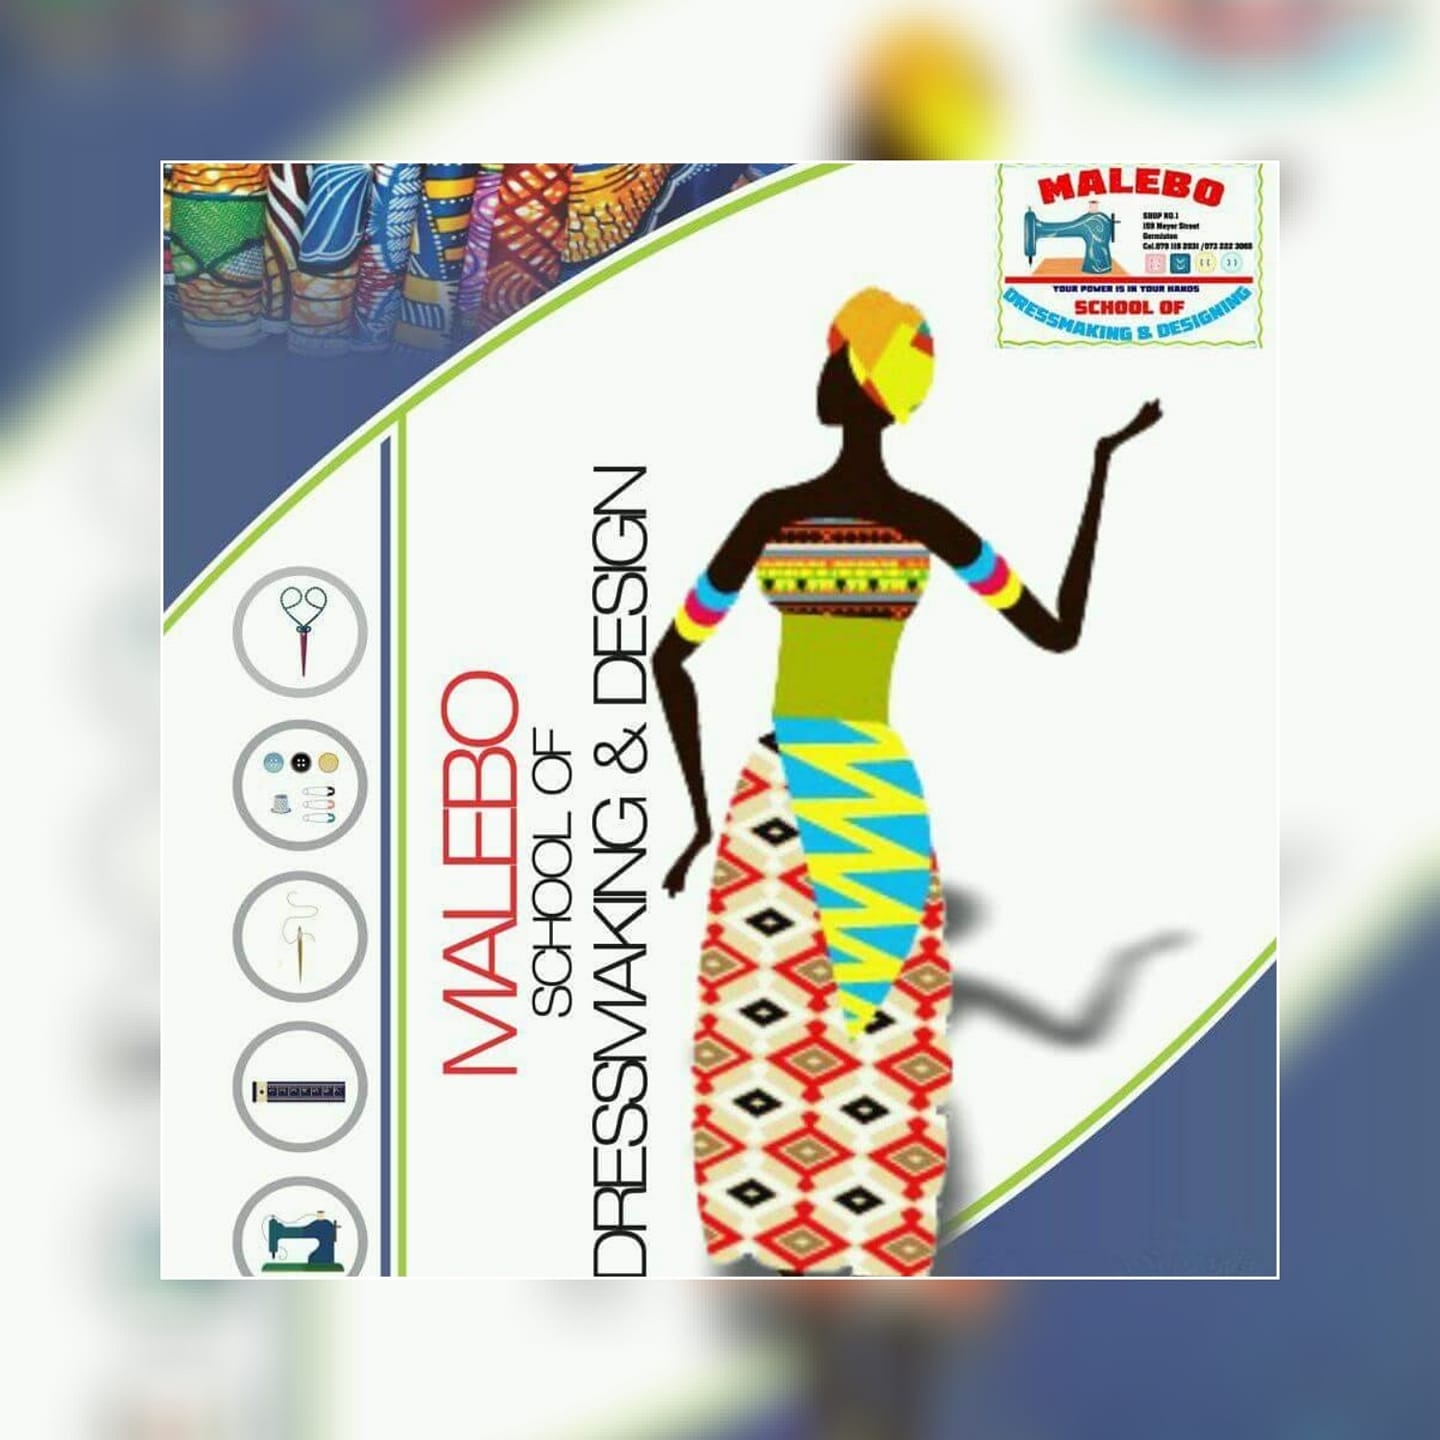 Malebo Dressmaking and Designing School Logo